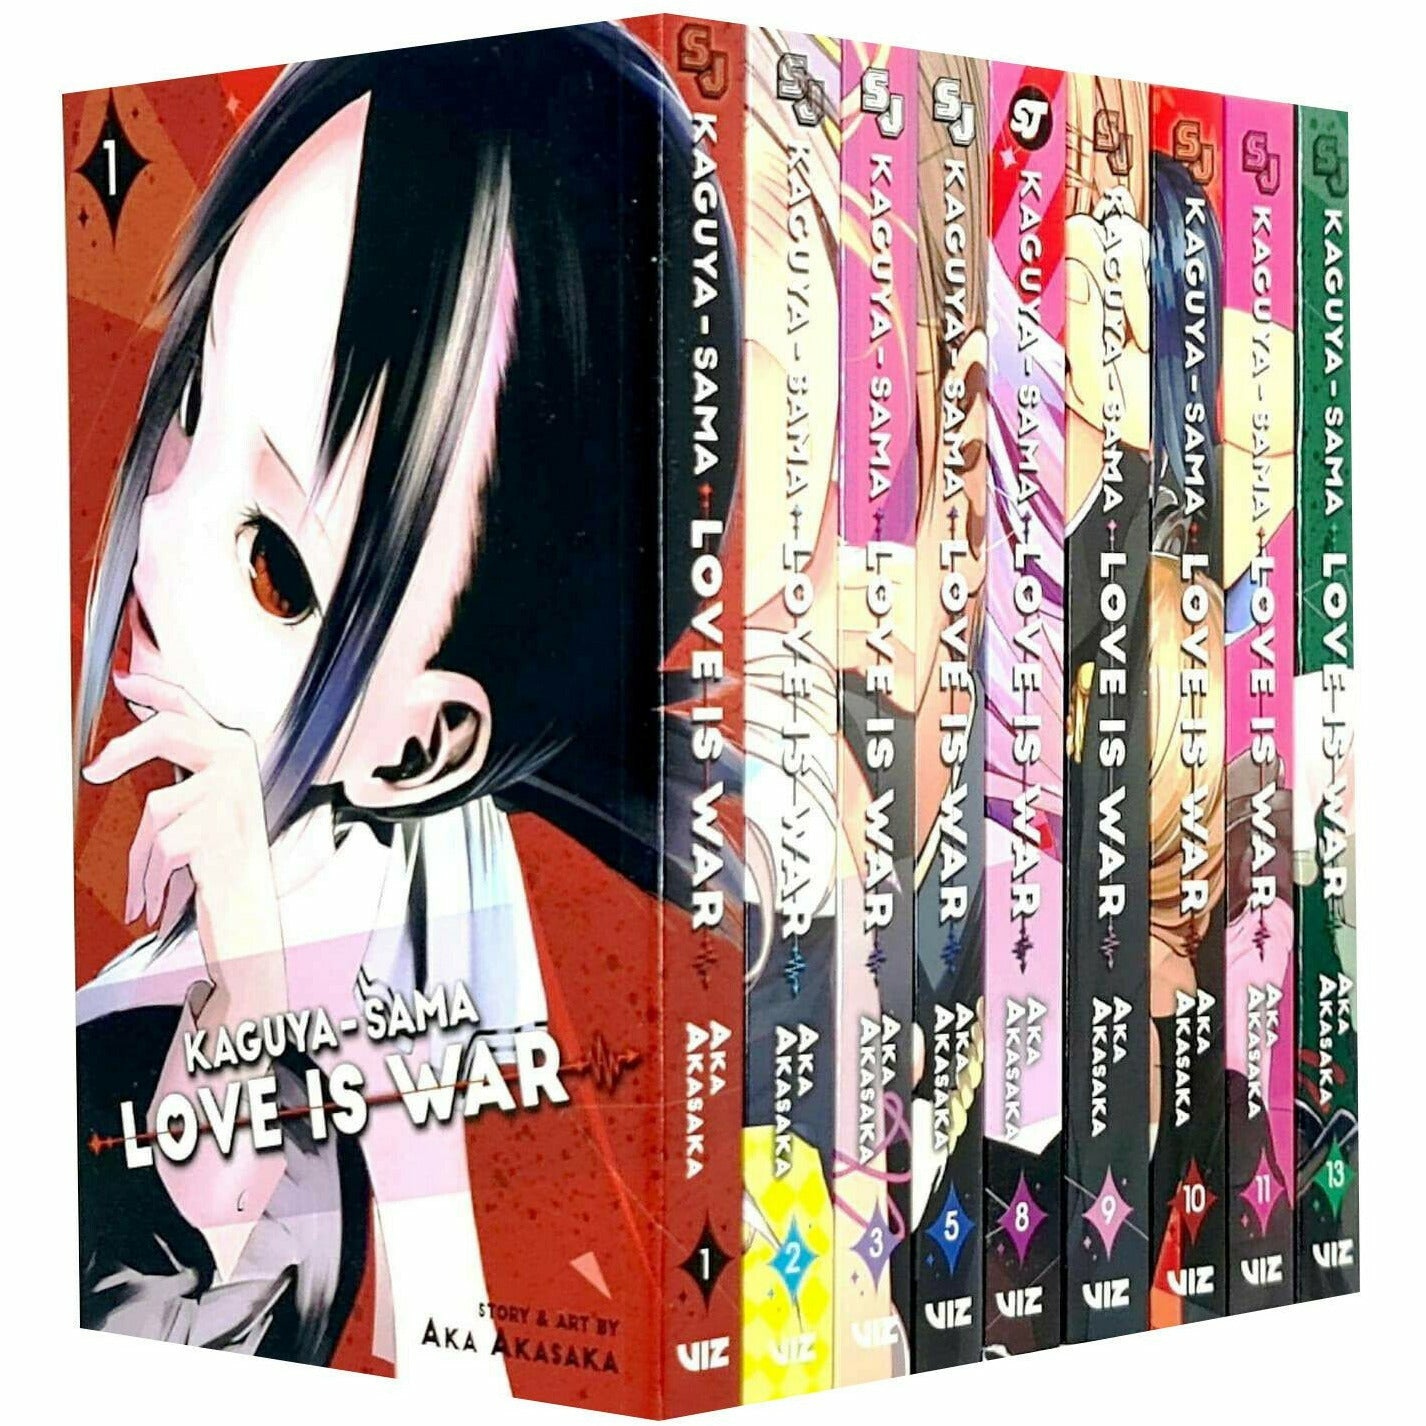 Kaguyasama Love Is War Vol 24 by Akasaka Aka - Berkelouw New Books